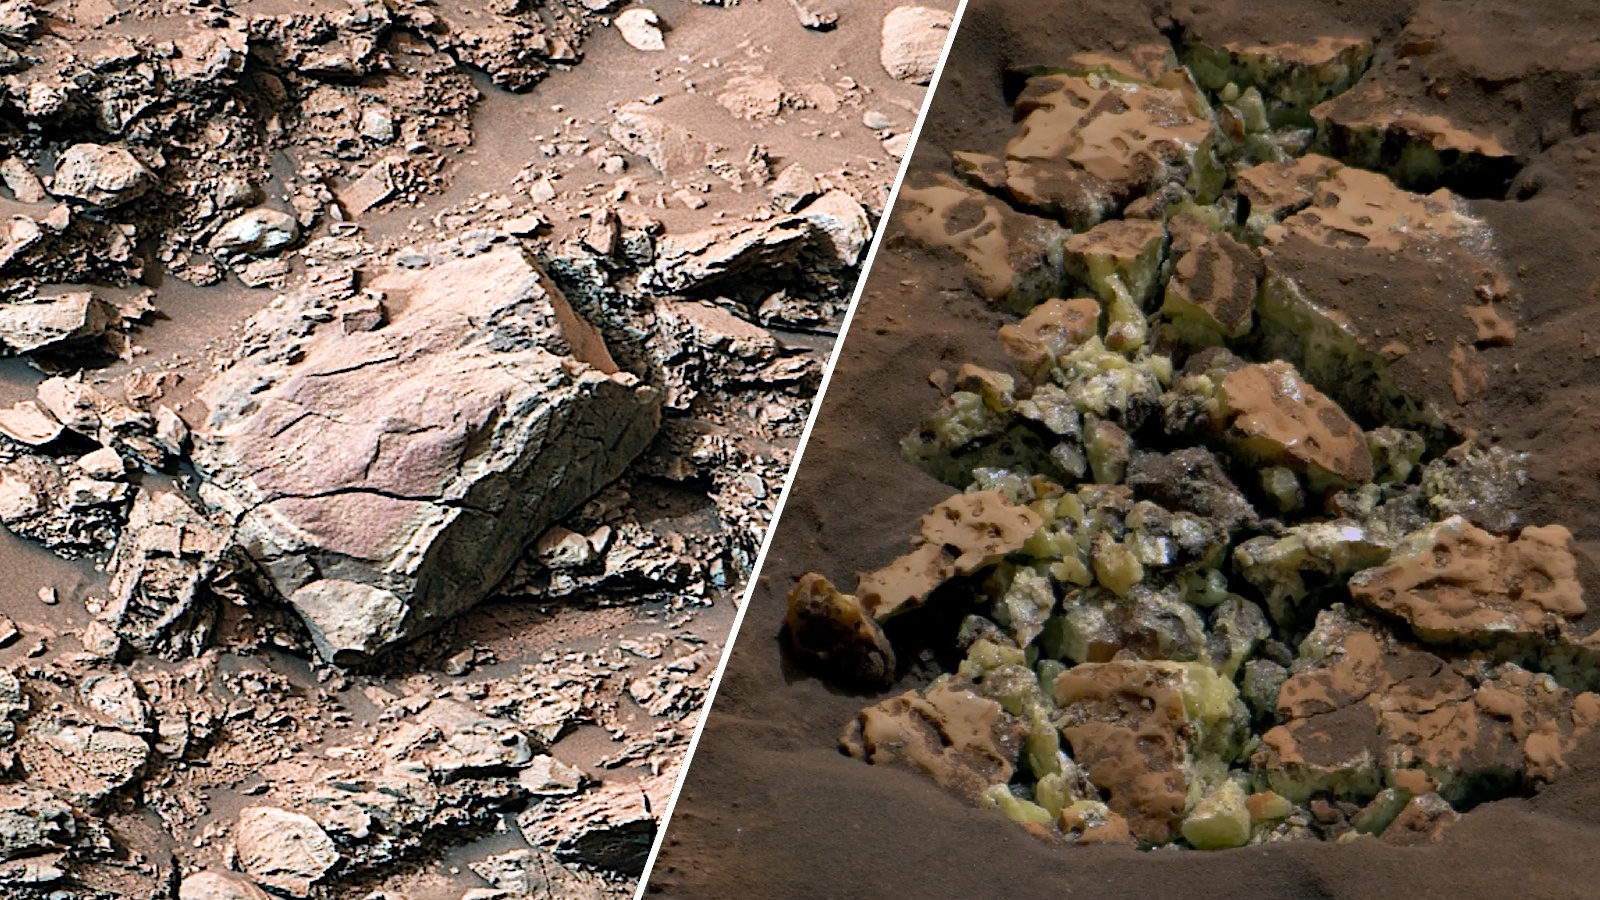 NASA's Curiosity rover accidentally opened a rock on Mars, revealing a yellow treasure